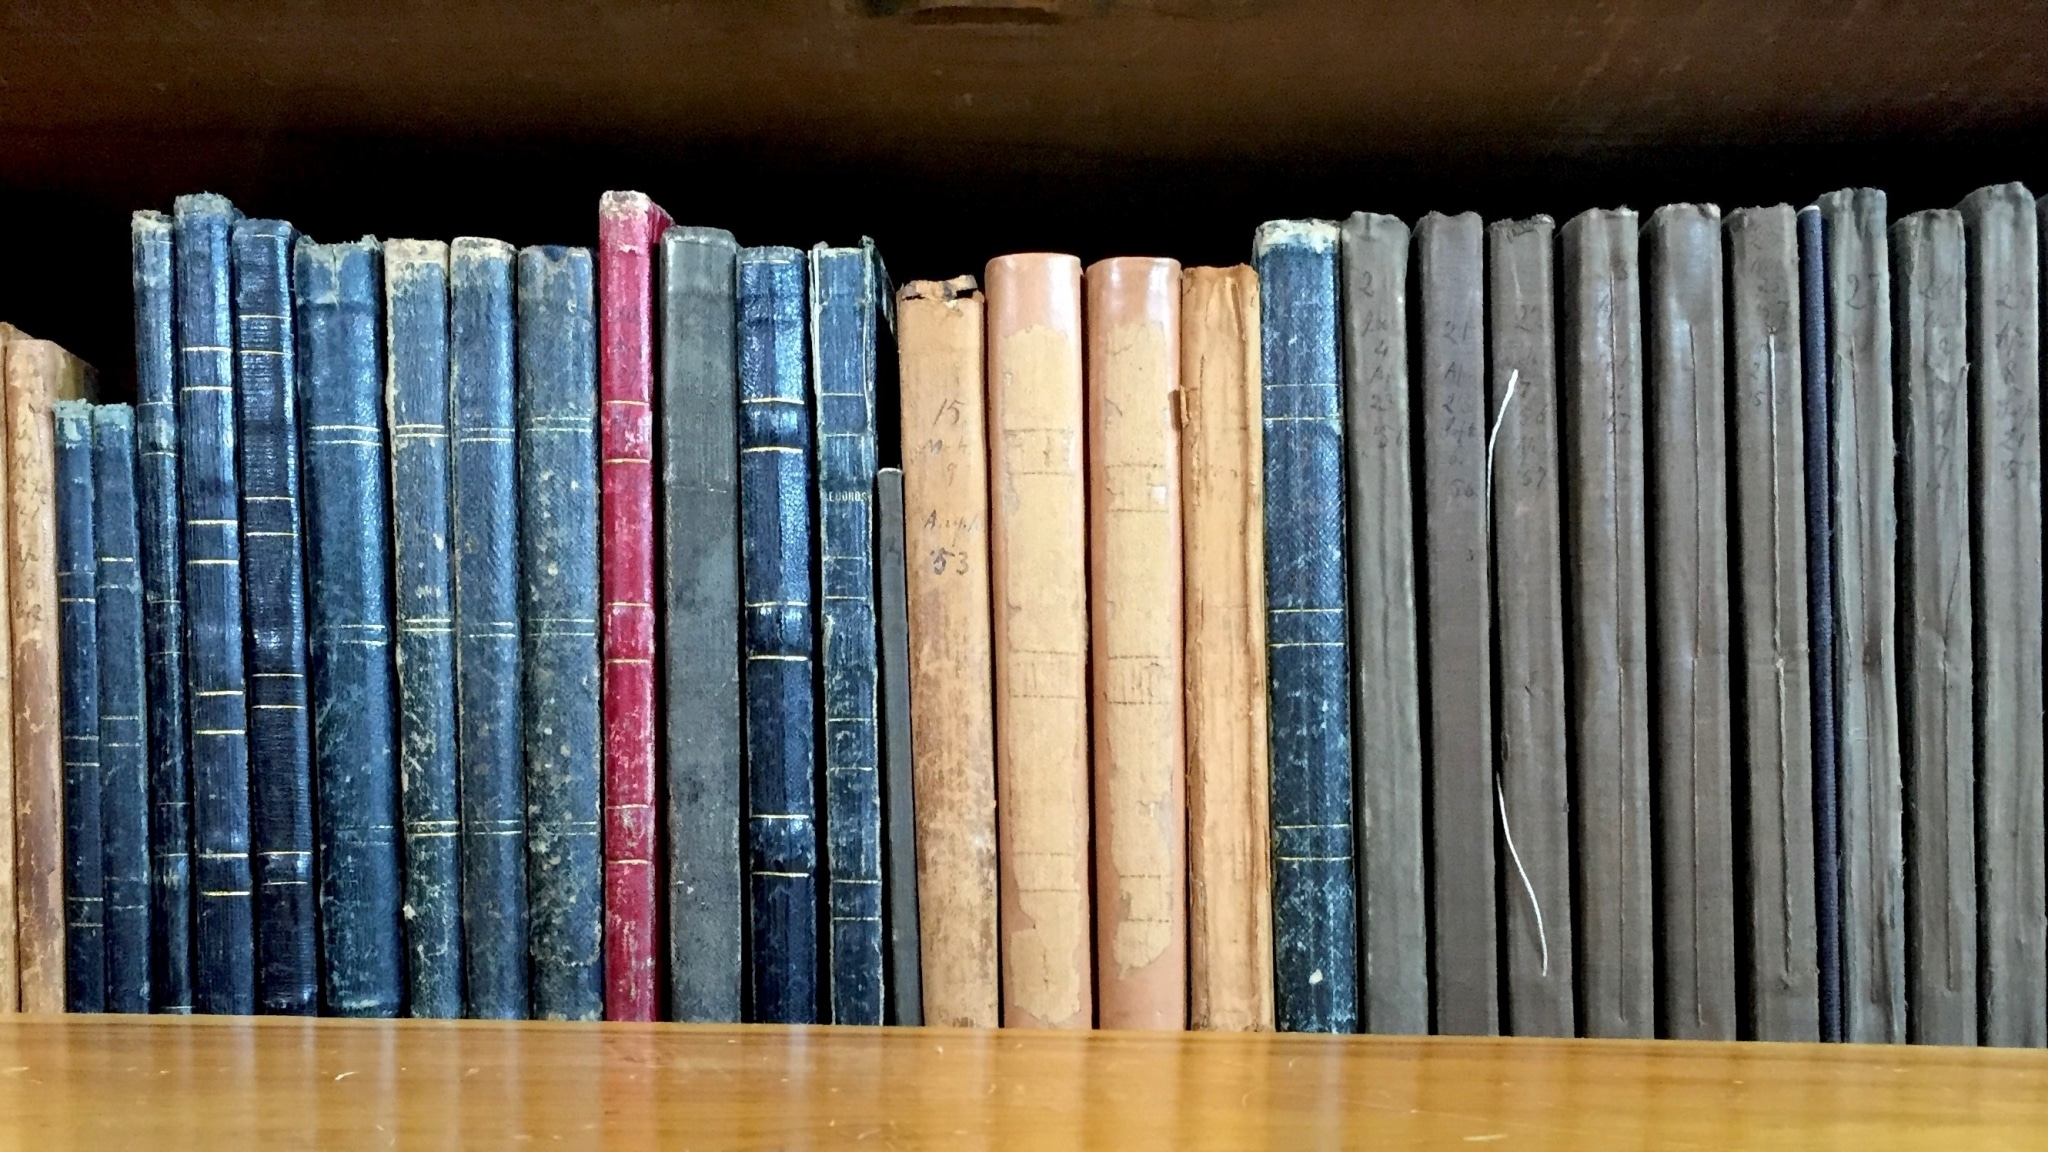 Thoreau journals lined up on a shelf